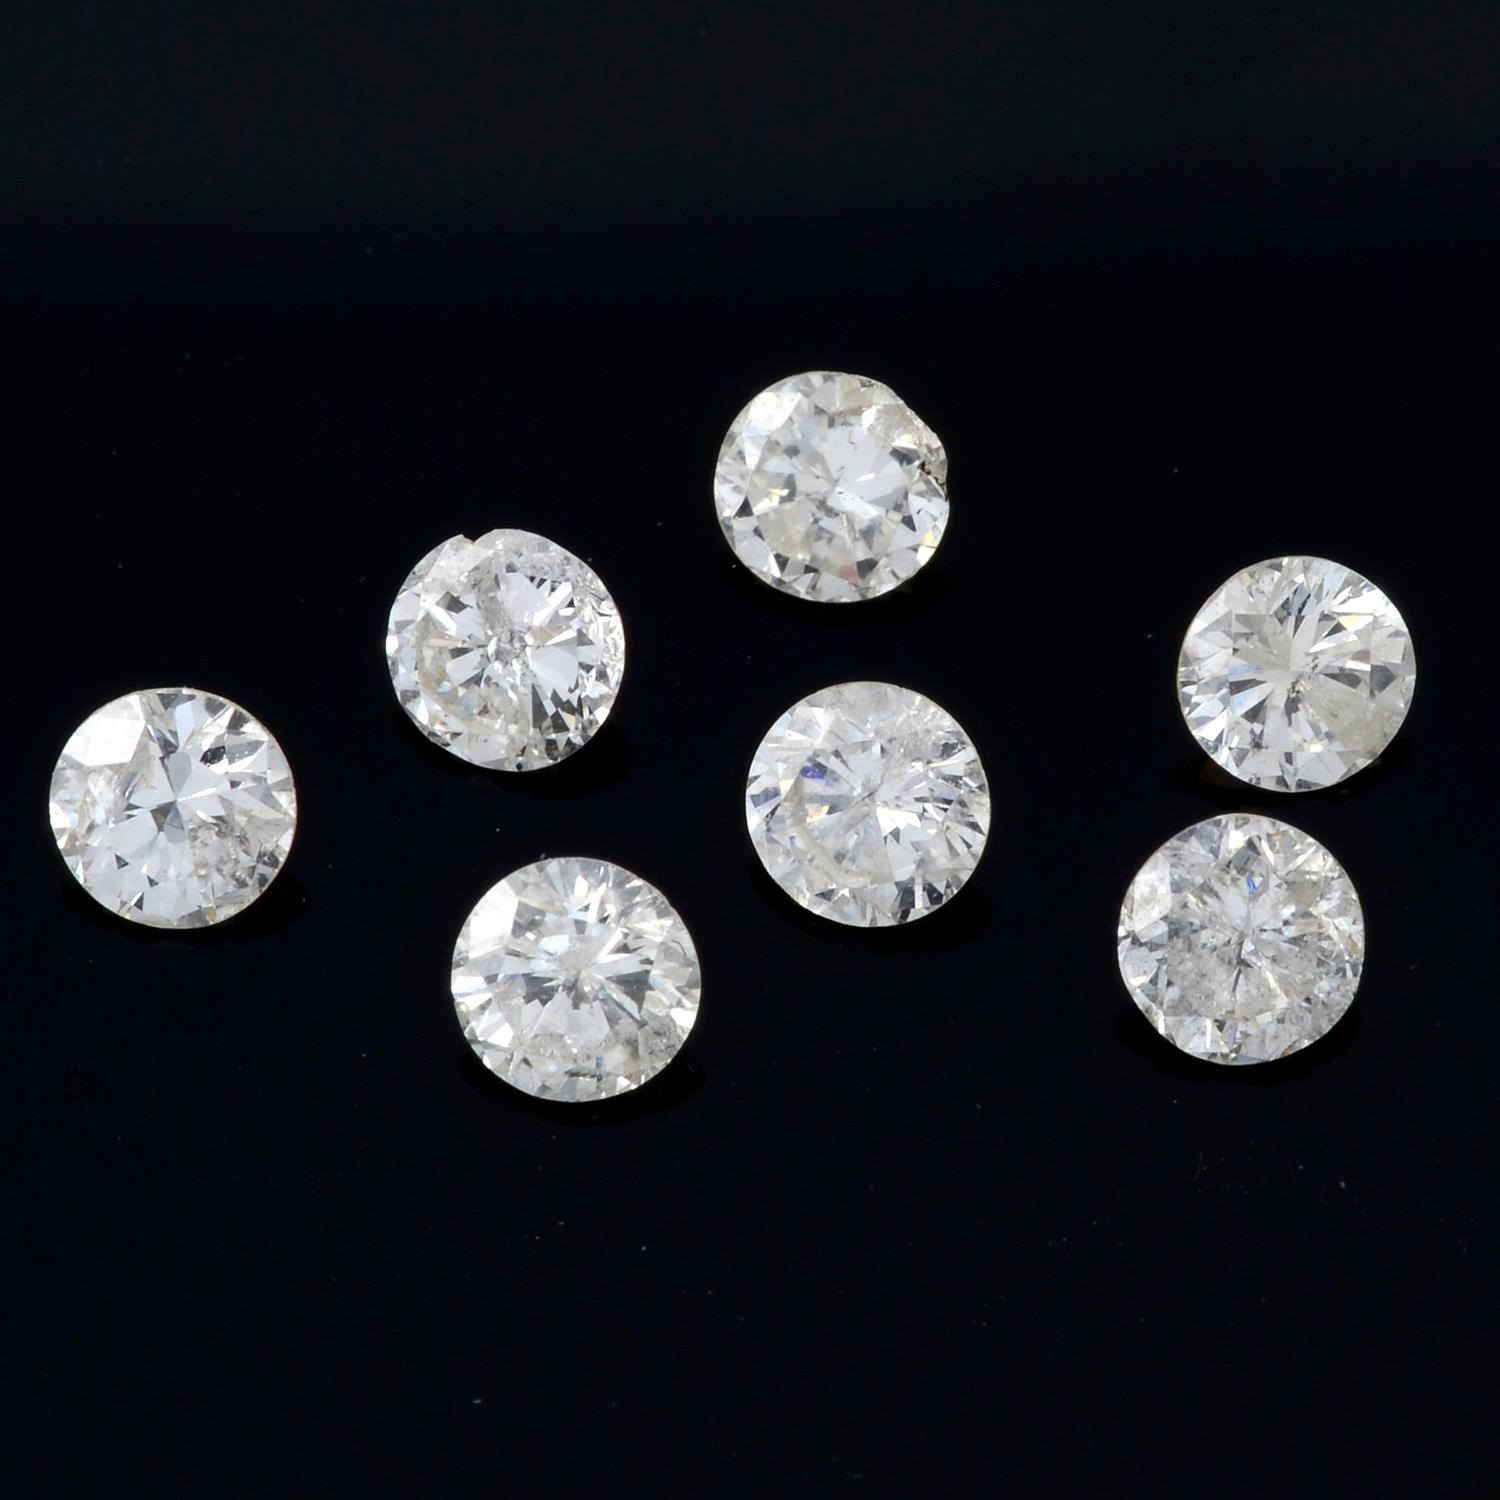 Seven brilliant cut diamonds, weighing 1.16ct